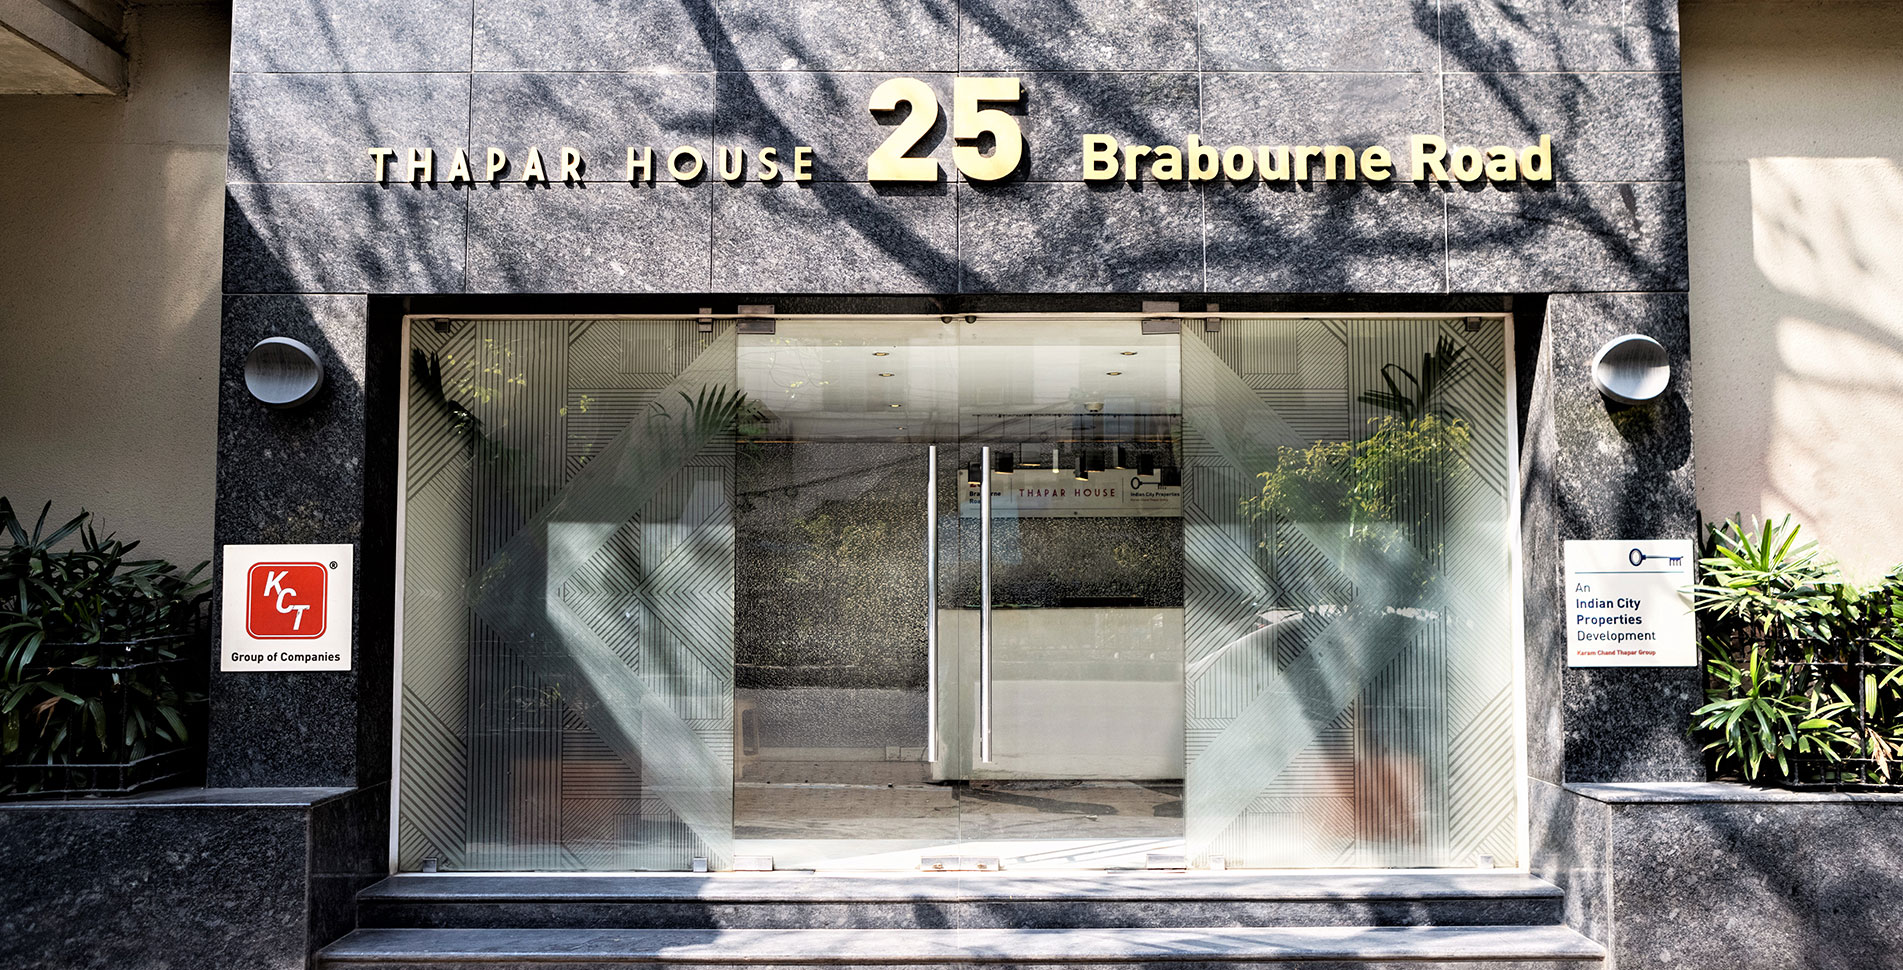 Thapar House 25 Brabourne Road